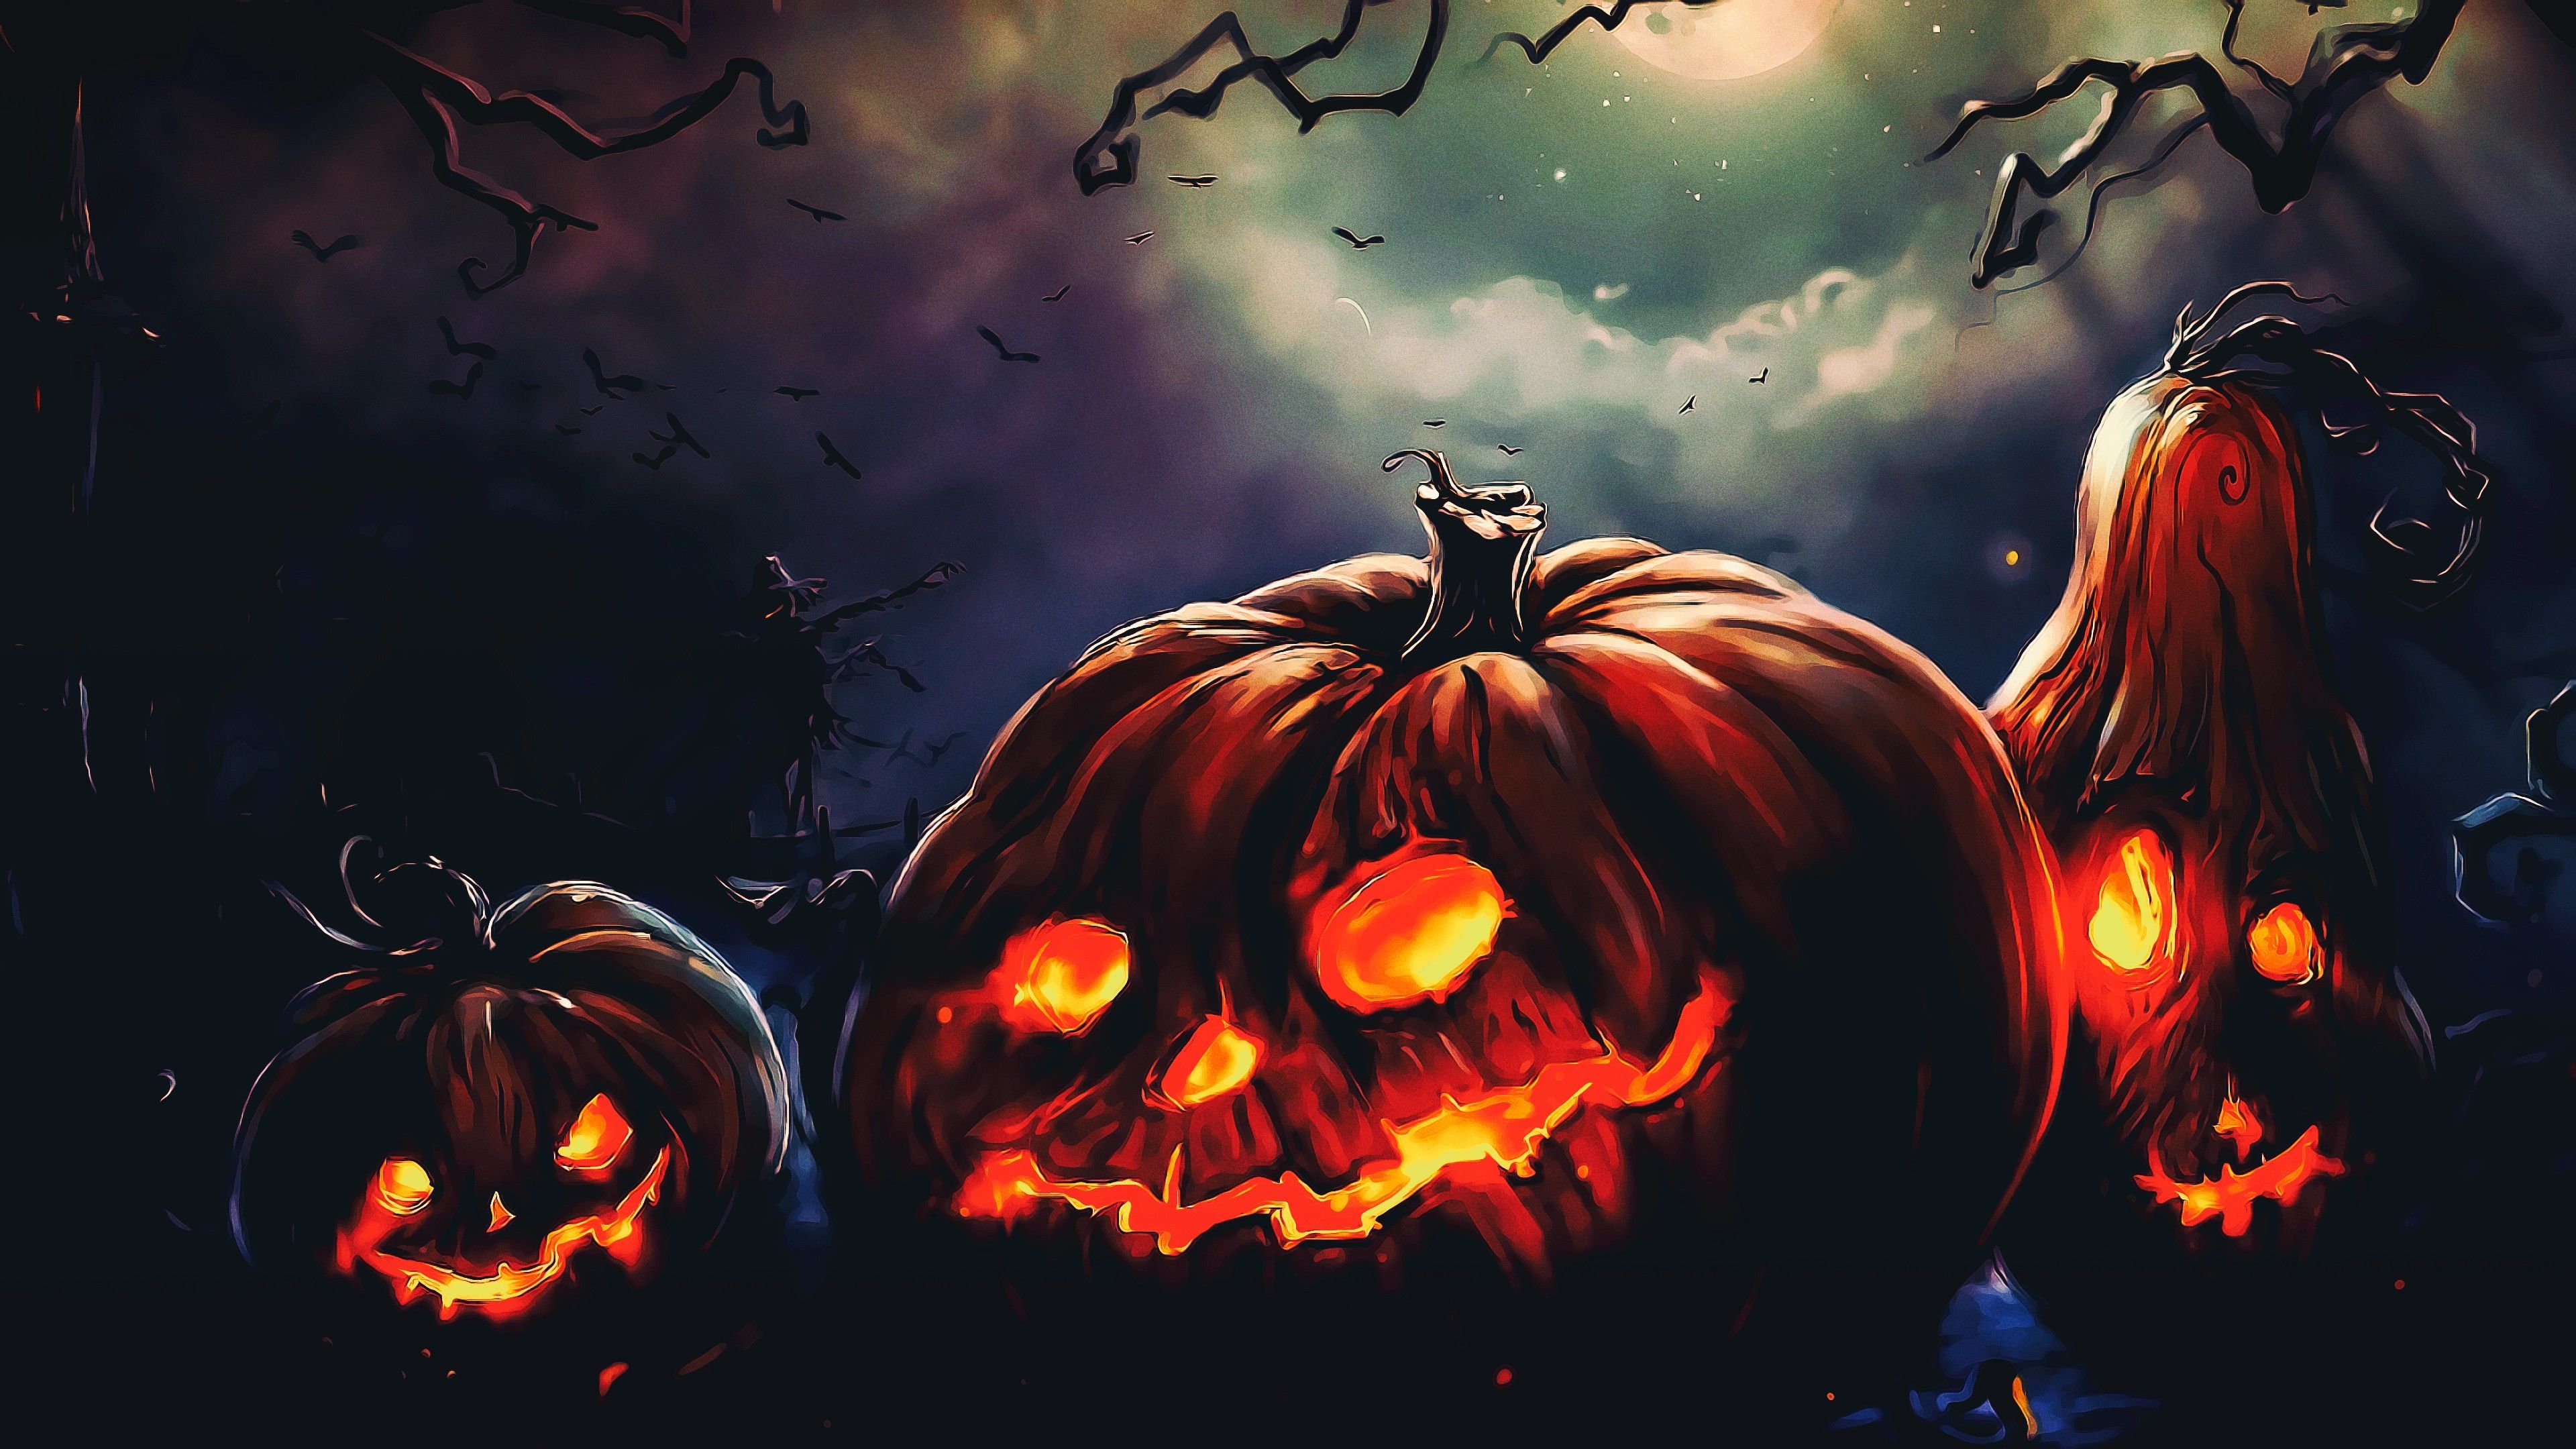 General 3840x2160 Halloween Terror night fantasy art Photohop. Halloween wallpaper, Pumpkin wallpaper, Halloween mural